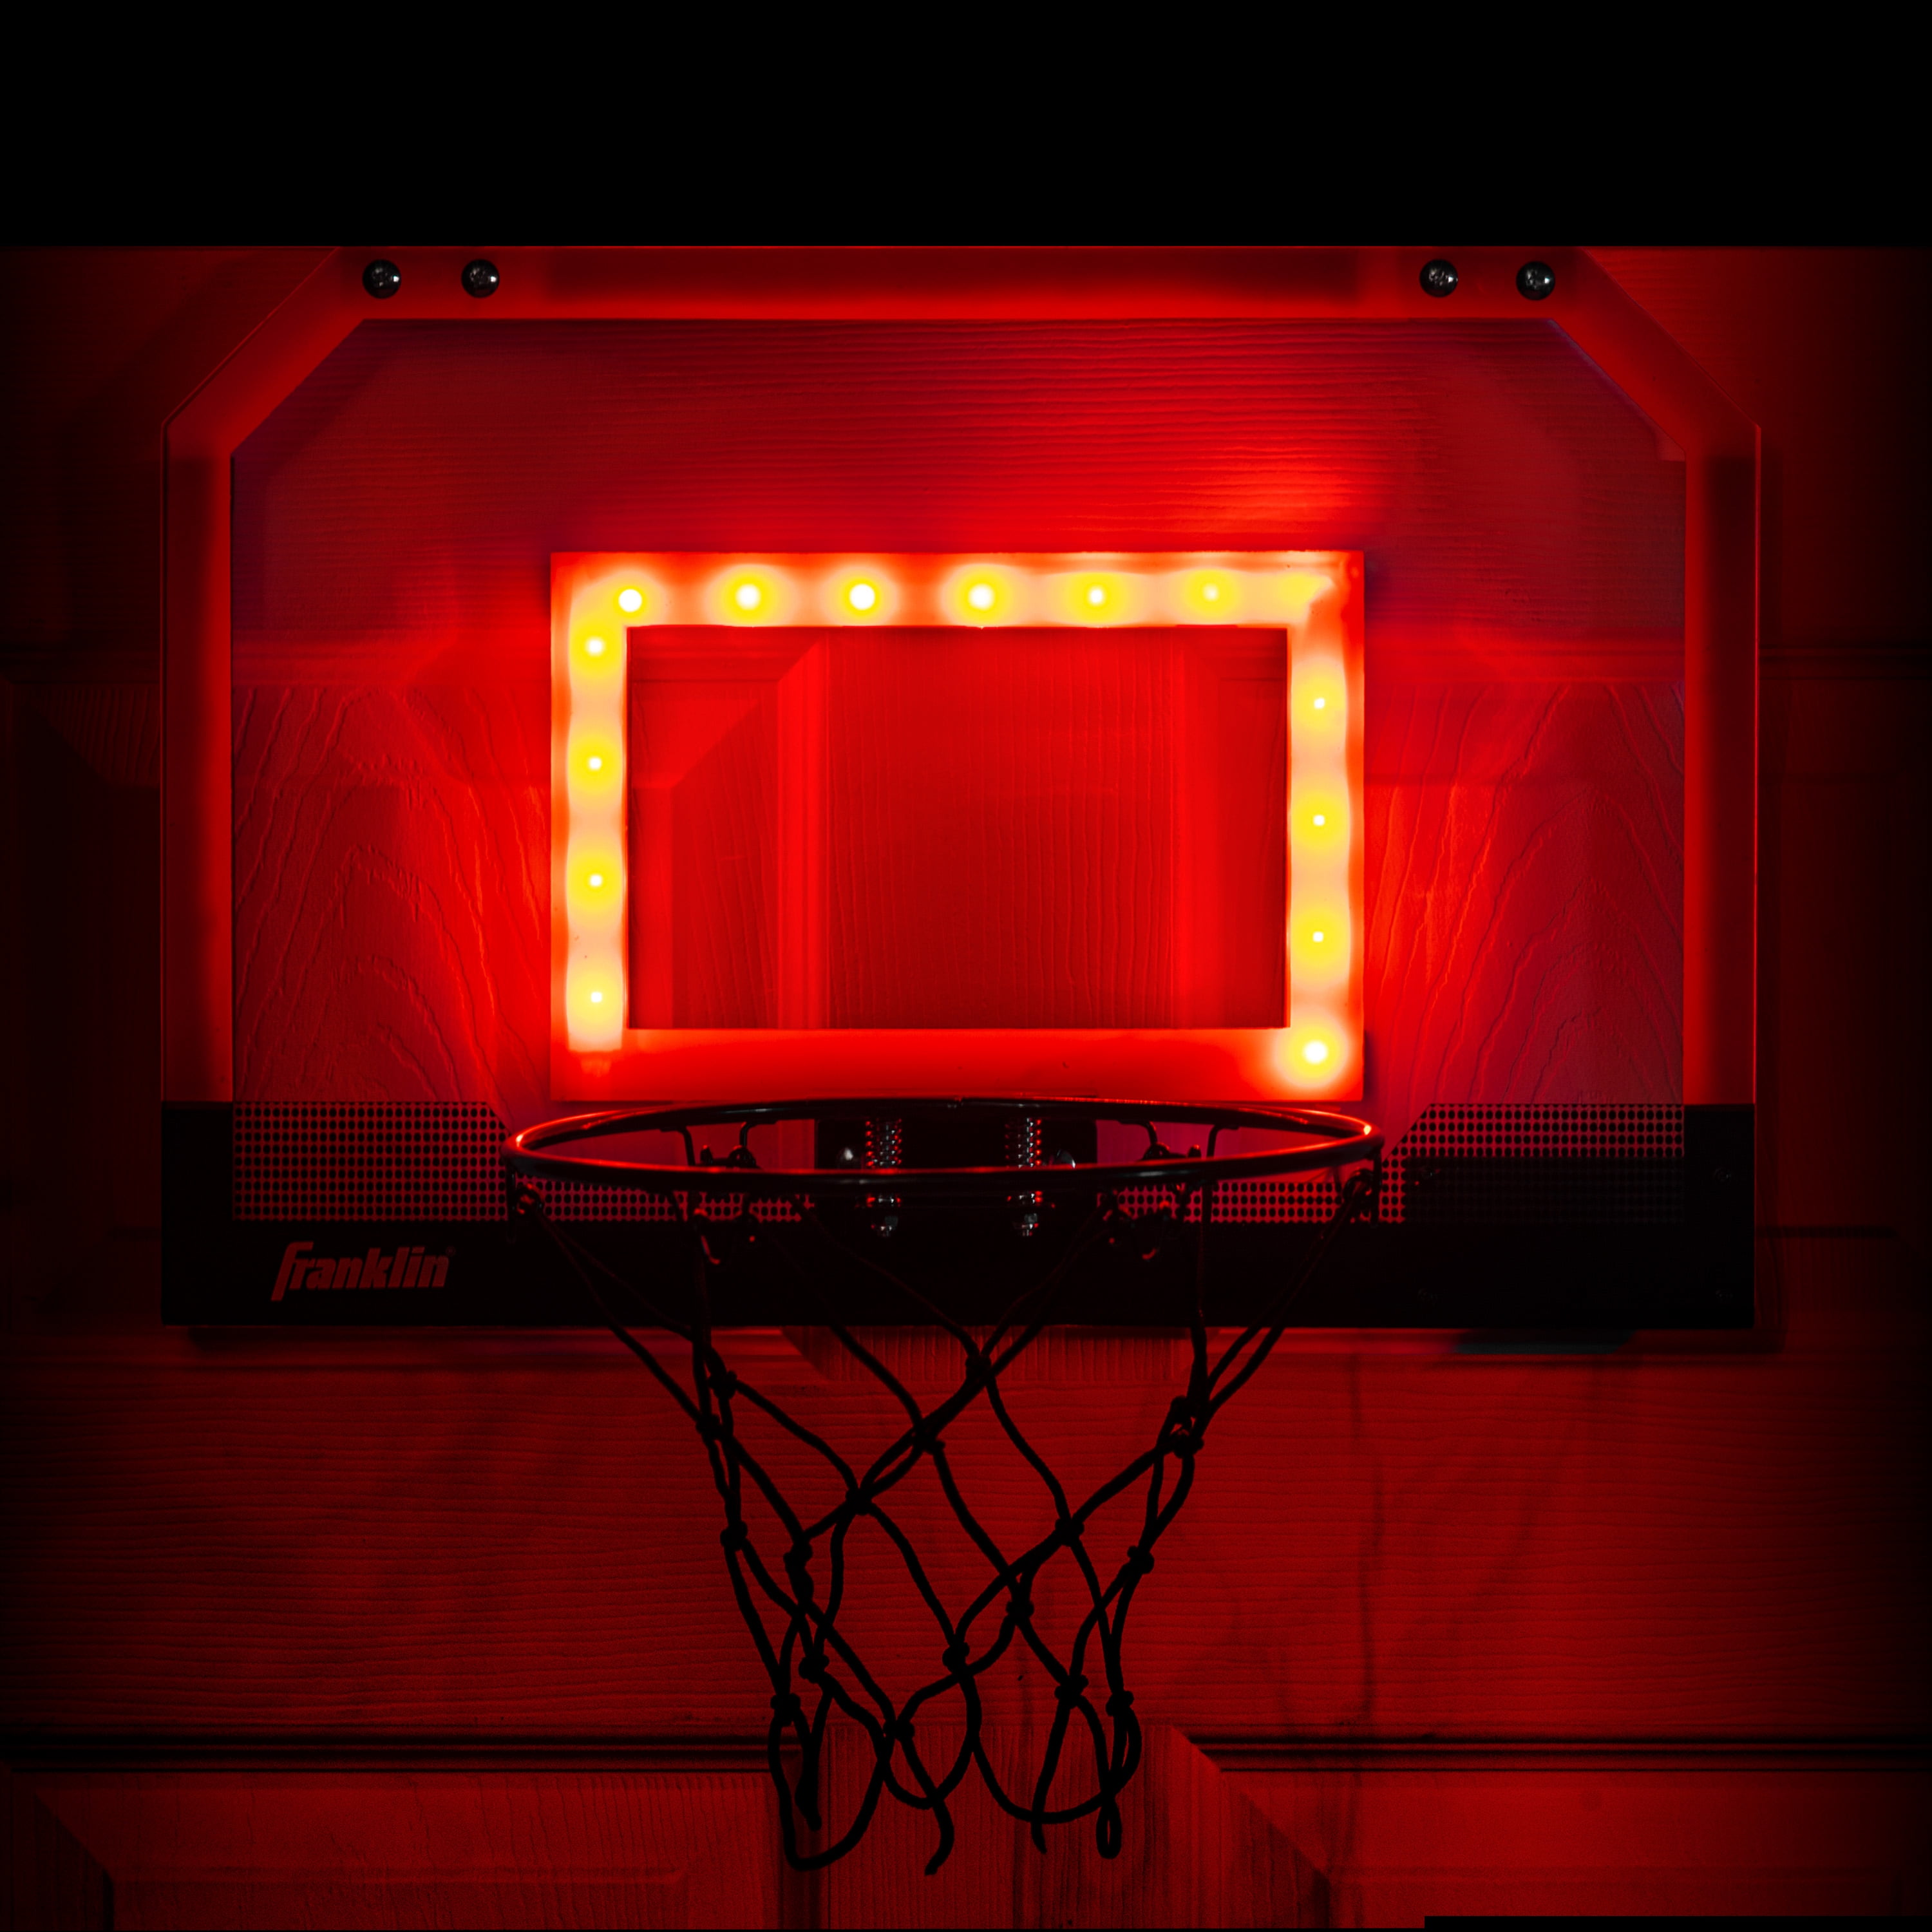 Franklin Shot Clock Hoops Glow in The Dark Indoor Basketball 2 Players for sale online 